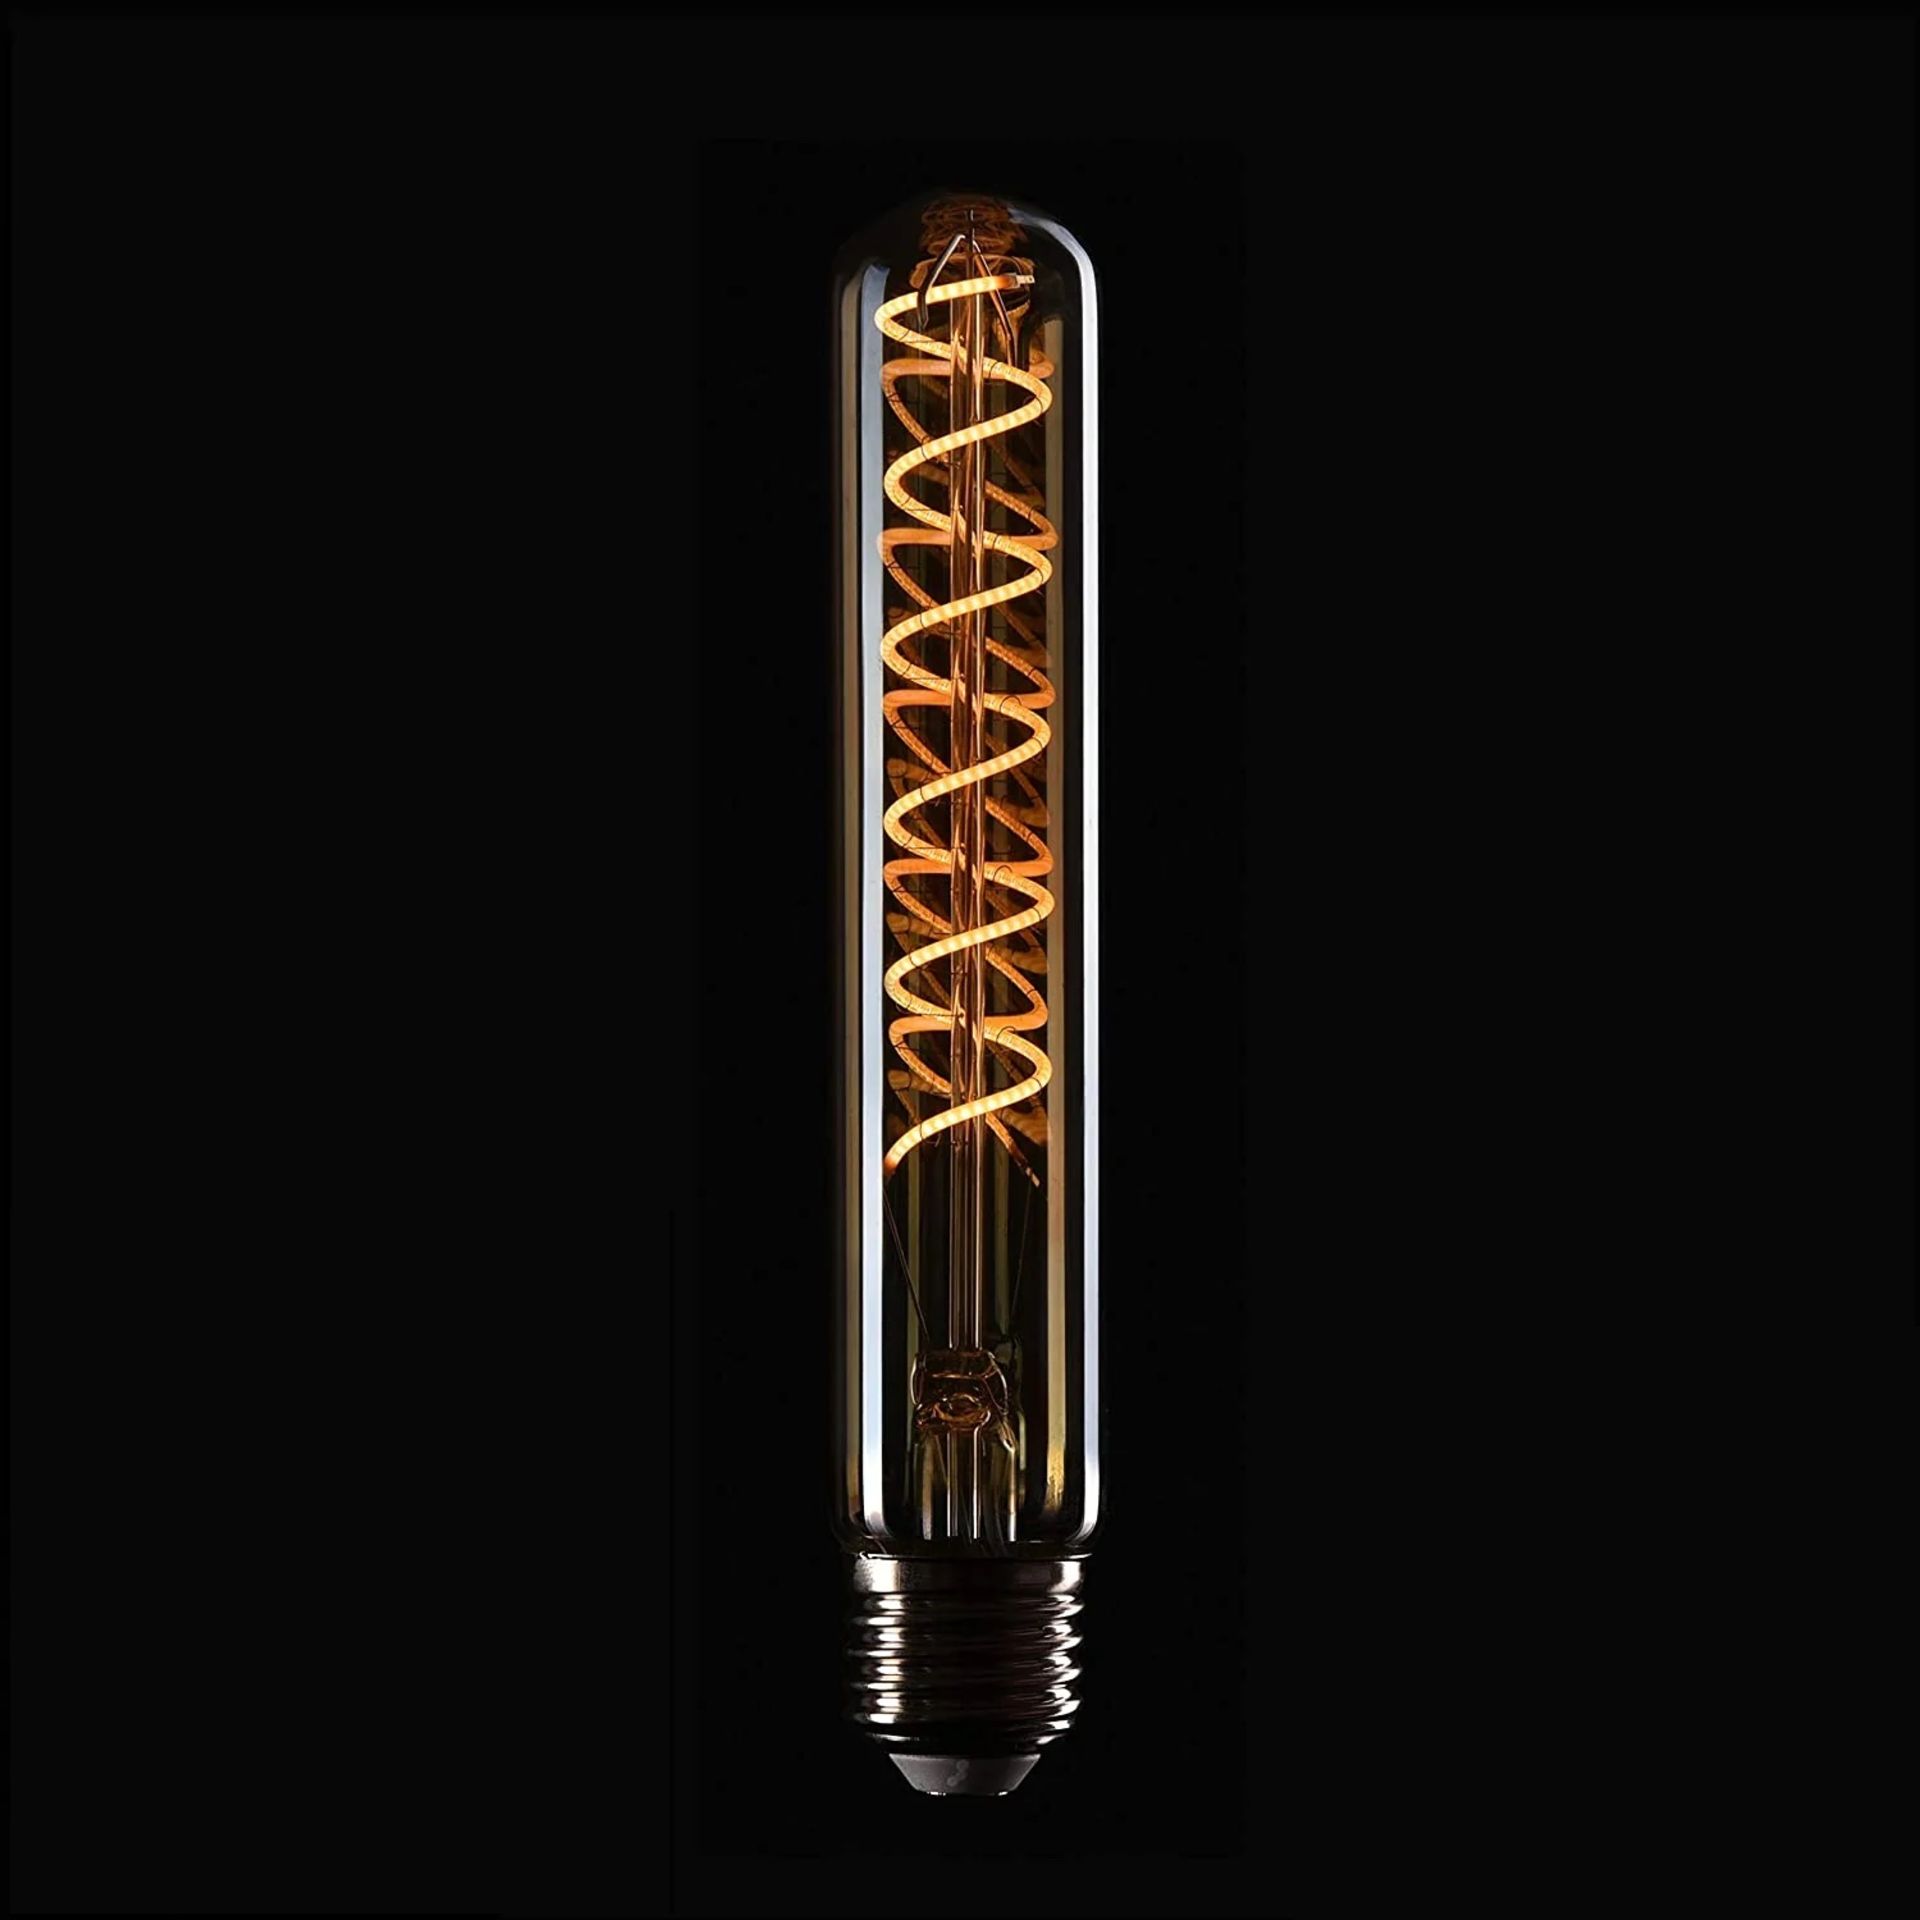 12 x CROWN LED Edison Flat Pipe Lightbulb 4W/40W Warm White - NEW & BOXED - BIG RRP! - Image 4 of 7